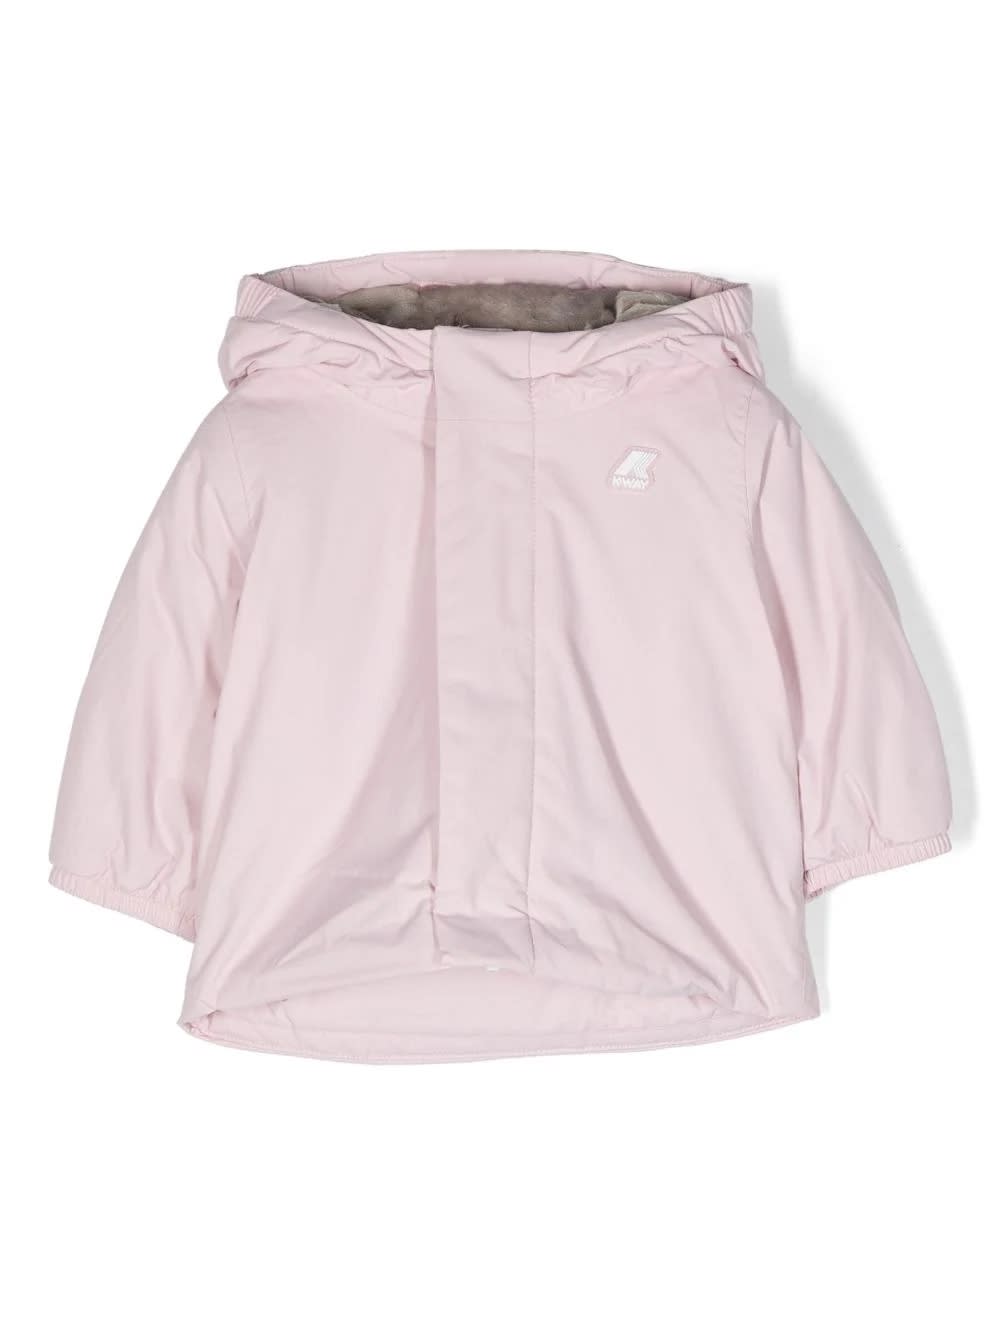 K-way Kids' Jacket With Hood In Pink